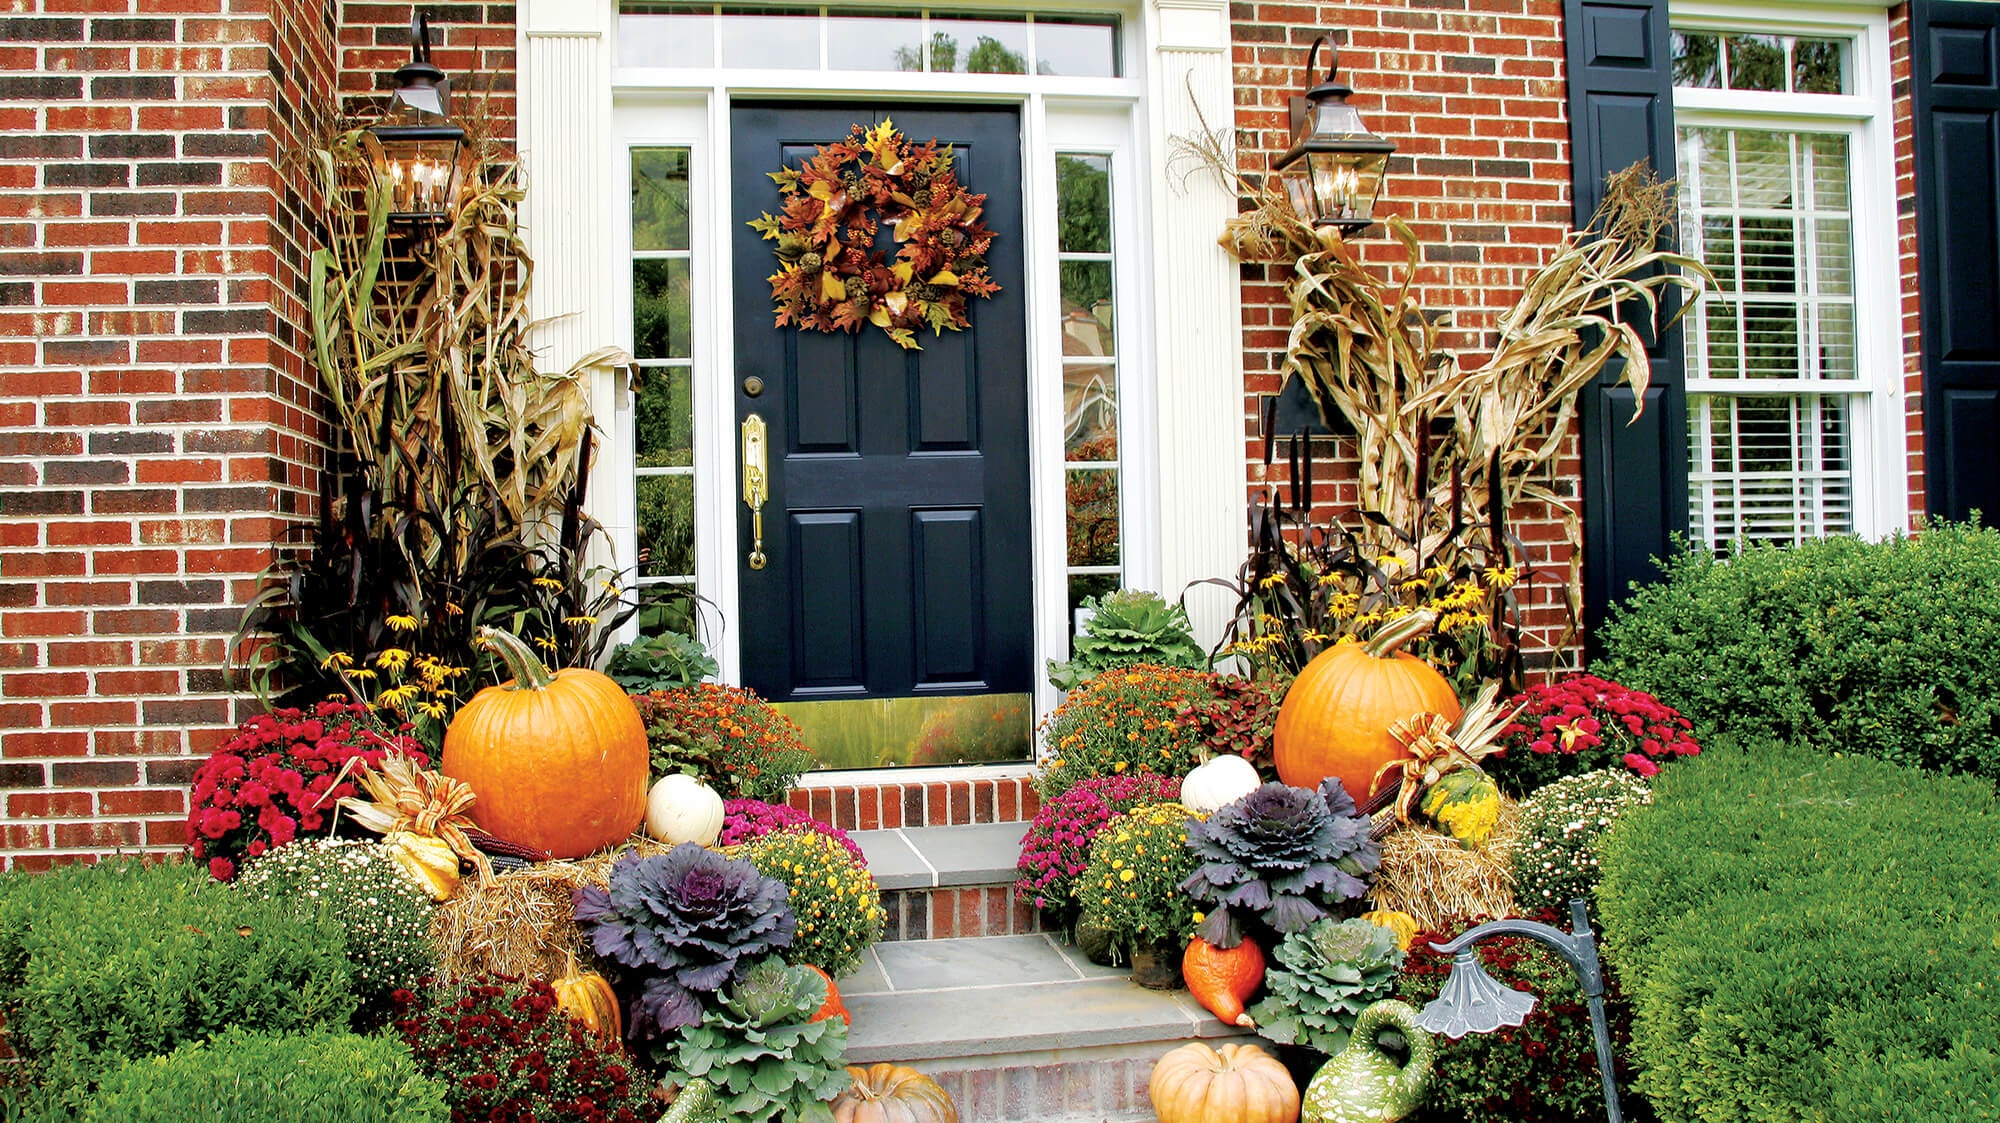 Fall Front Door Decorating